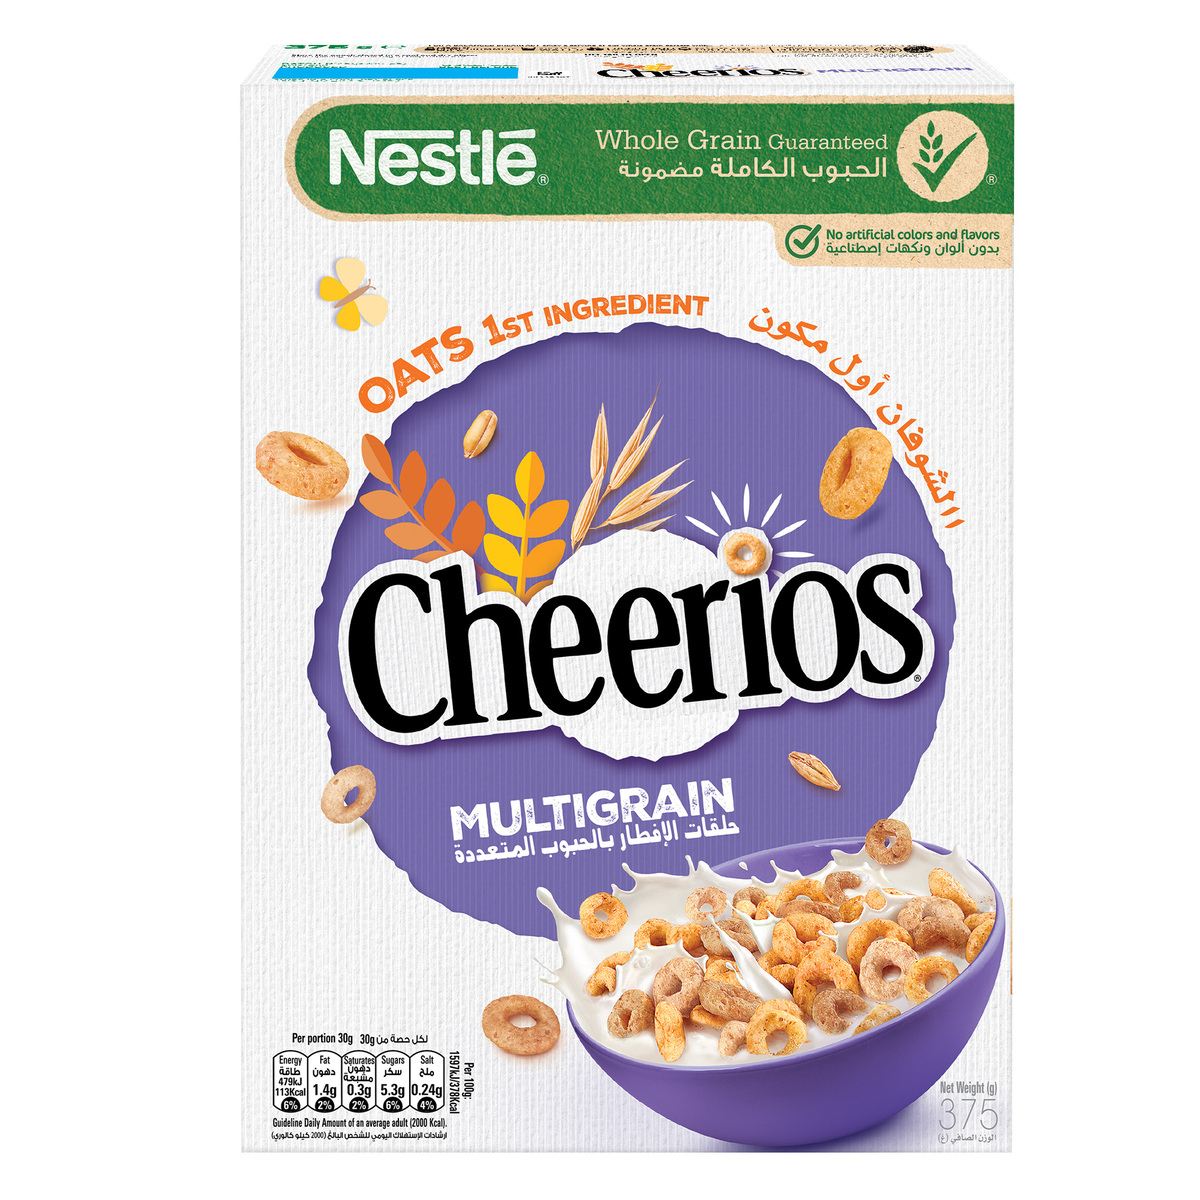 Nestle Cheerios Multigrain Breakfast Cereal 375 g